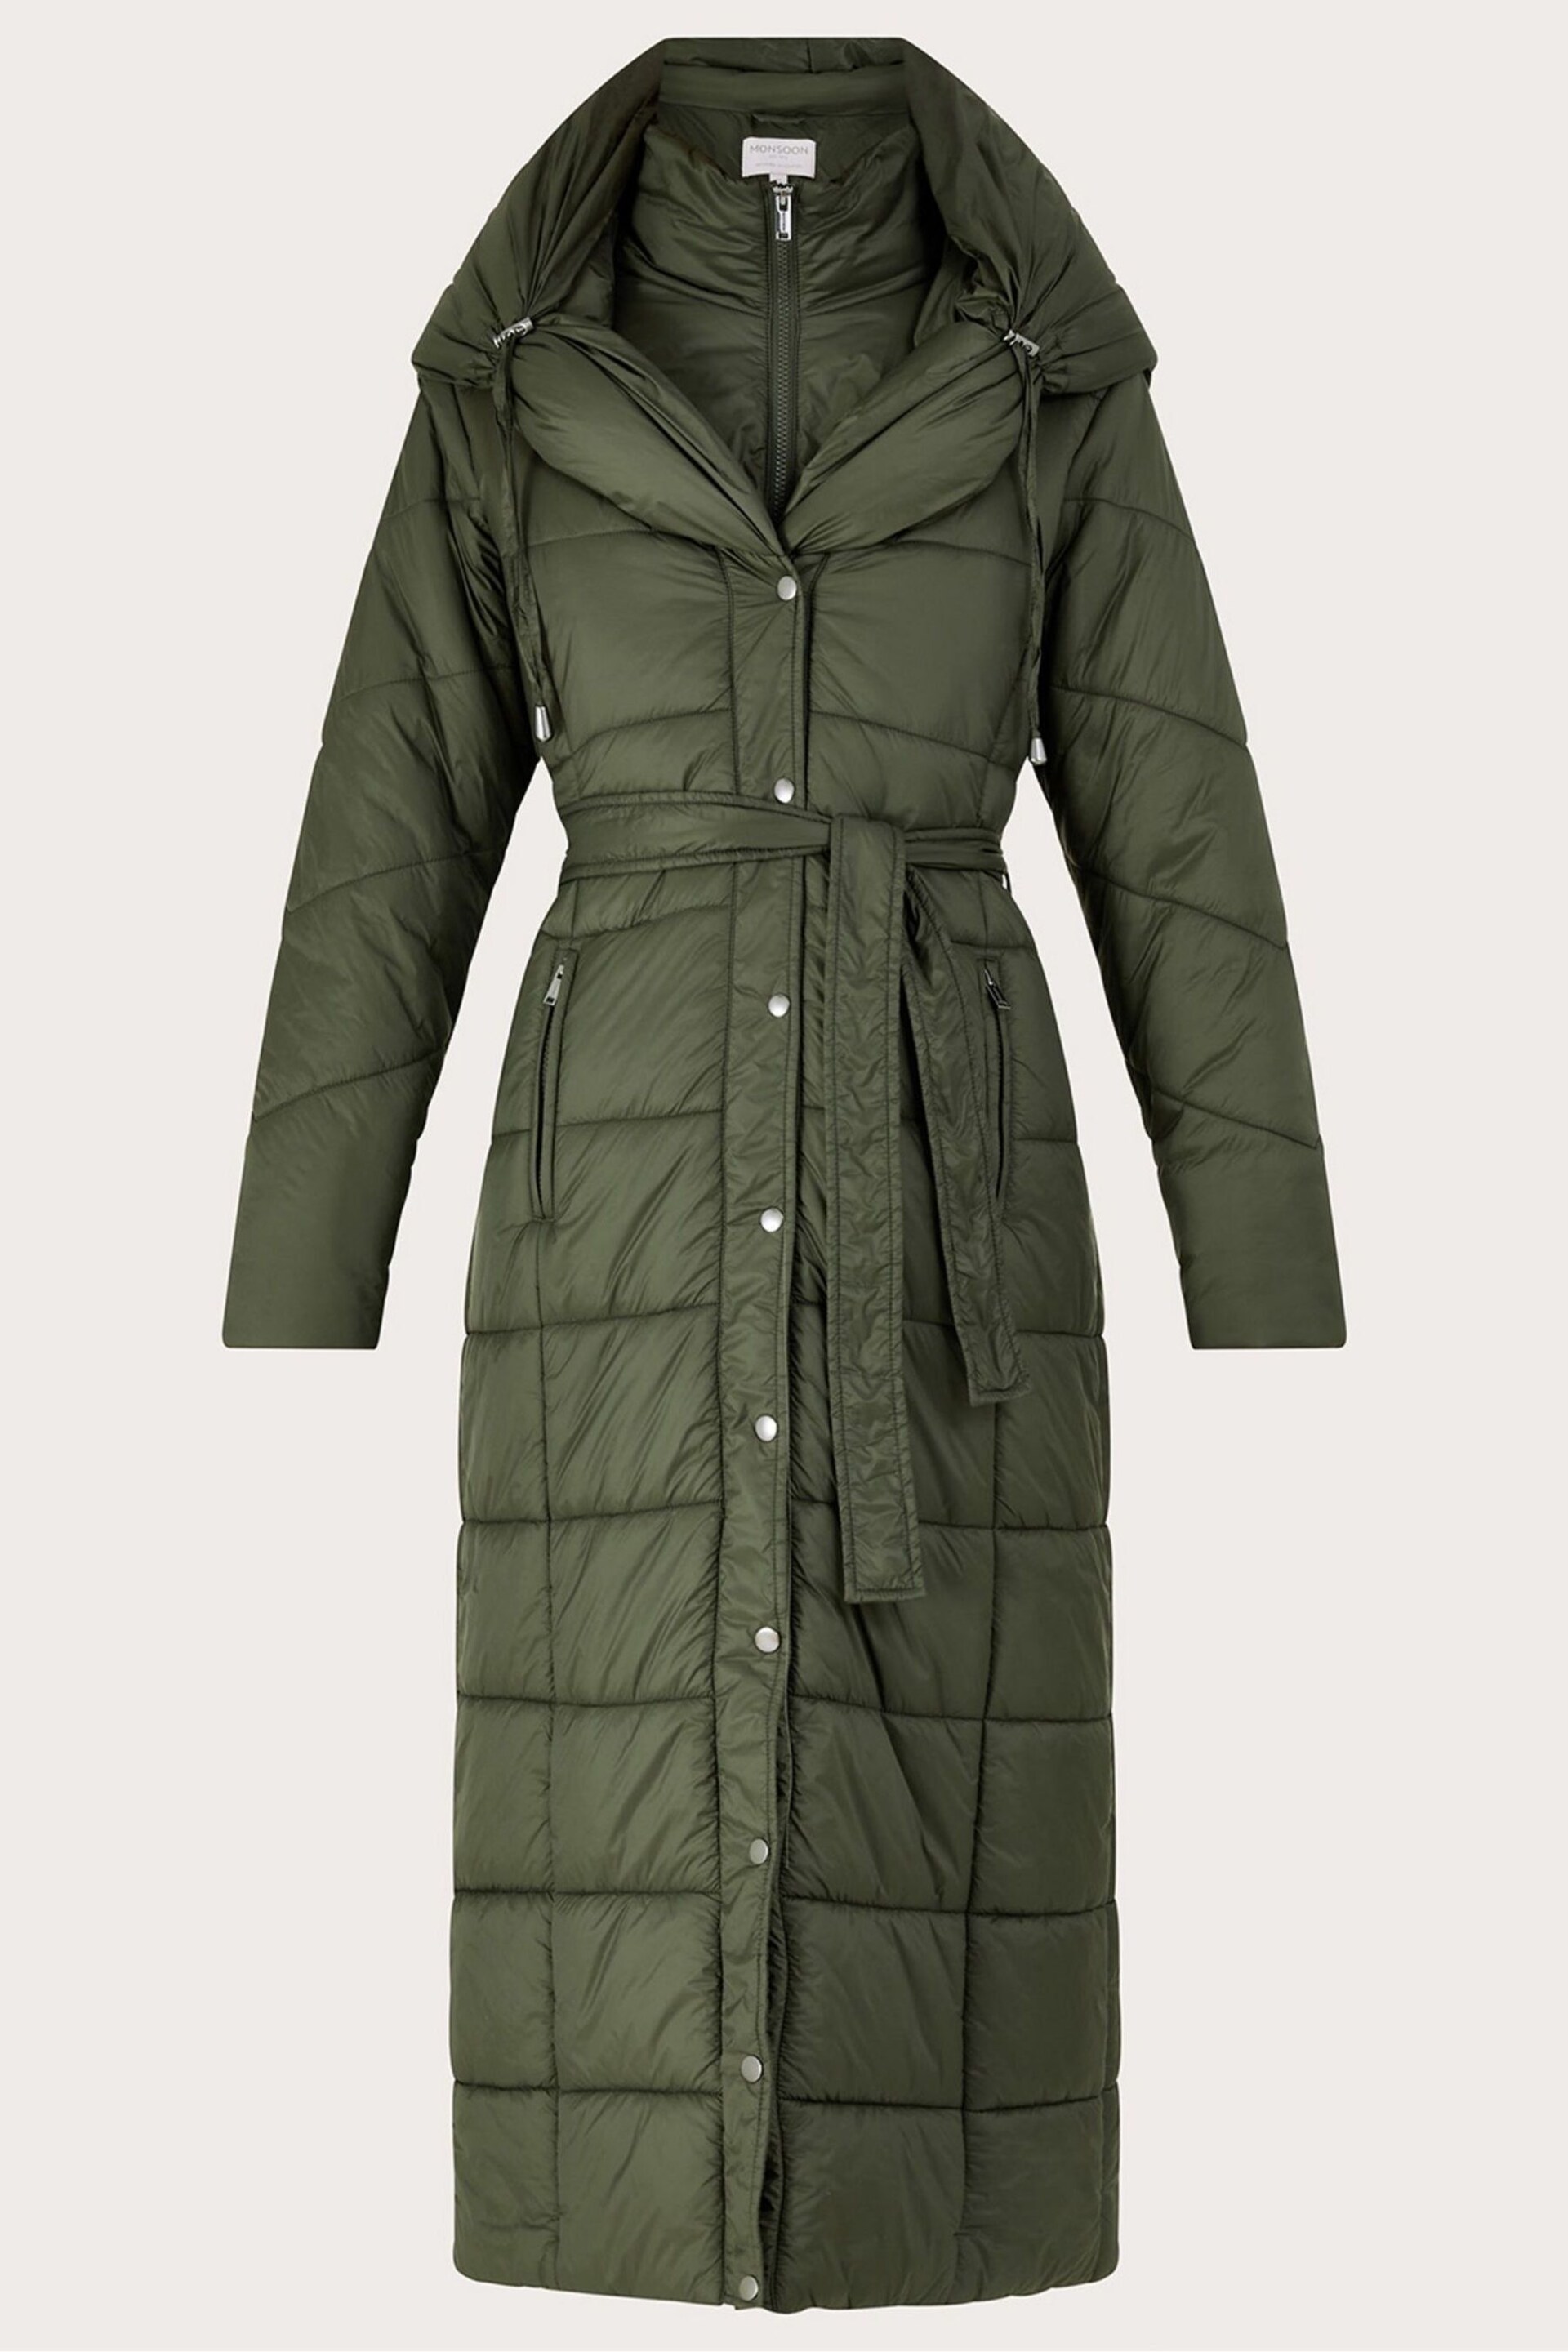 Monsoon Green Lorena Padded Belted Maxi Coat - Image 4 of 4